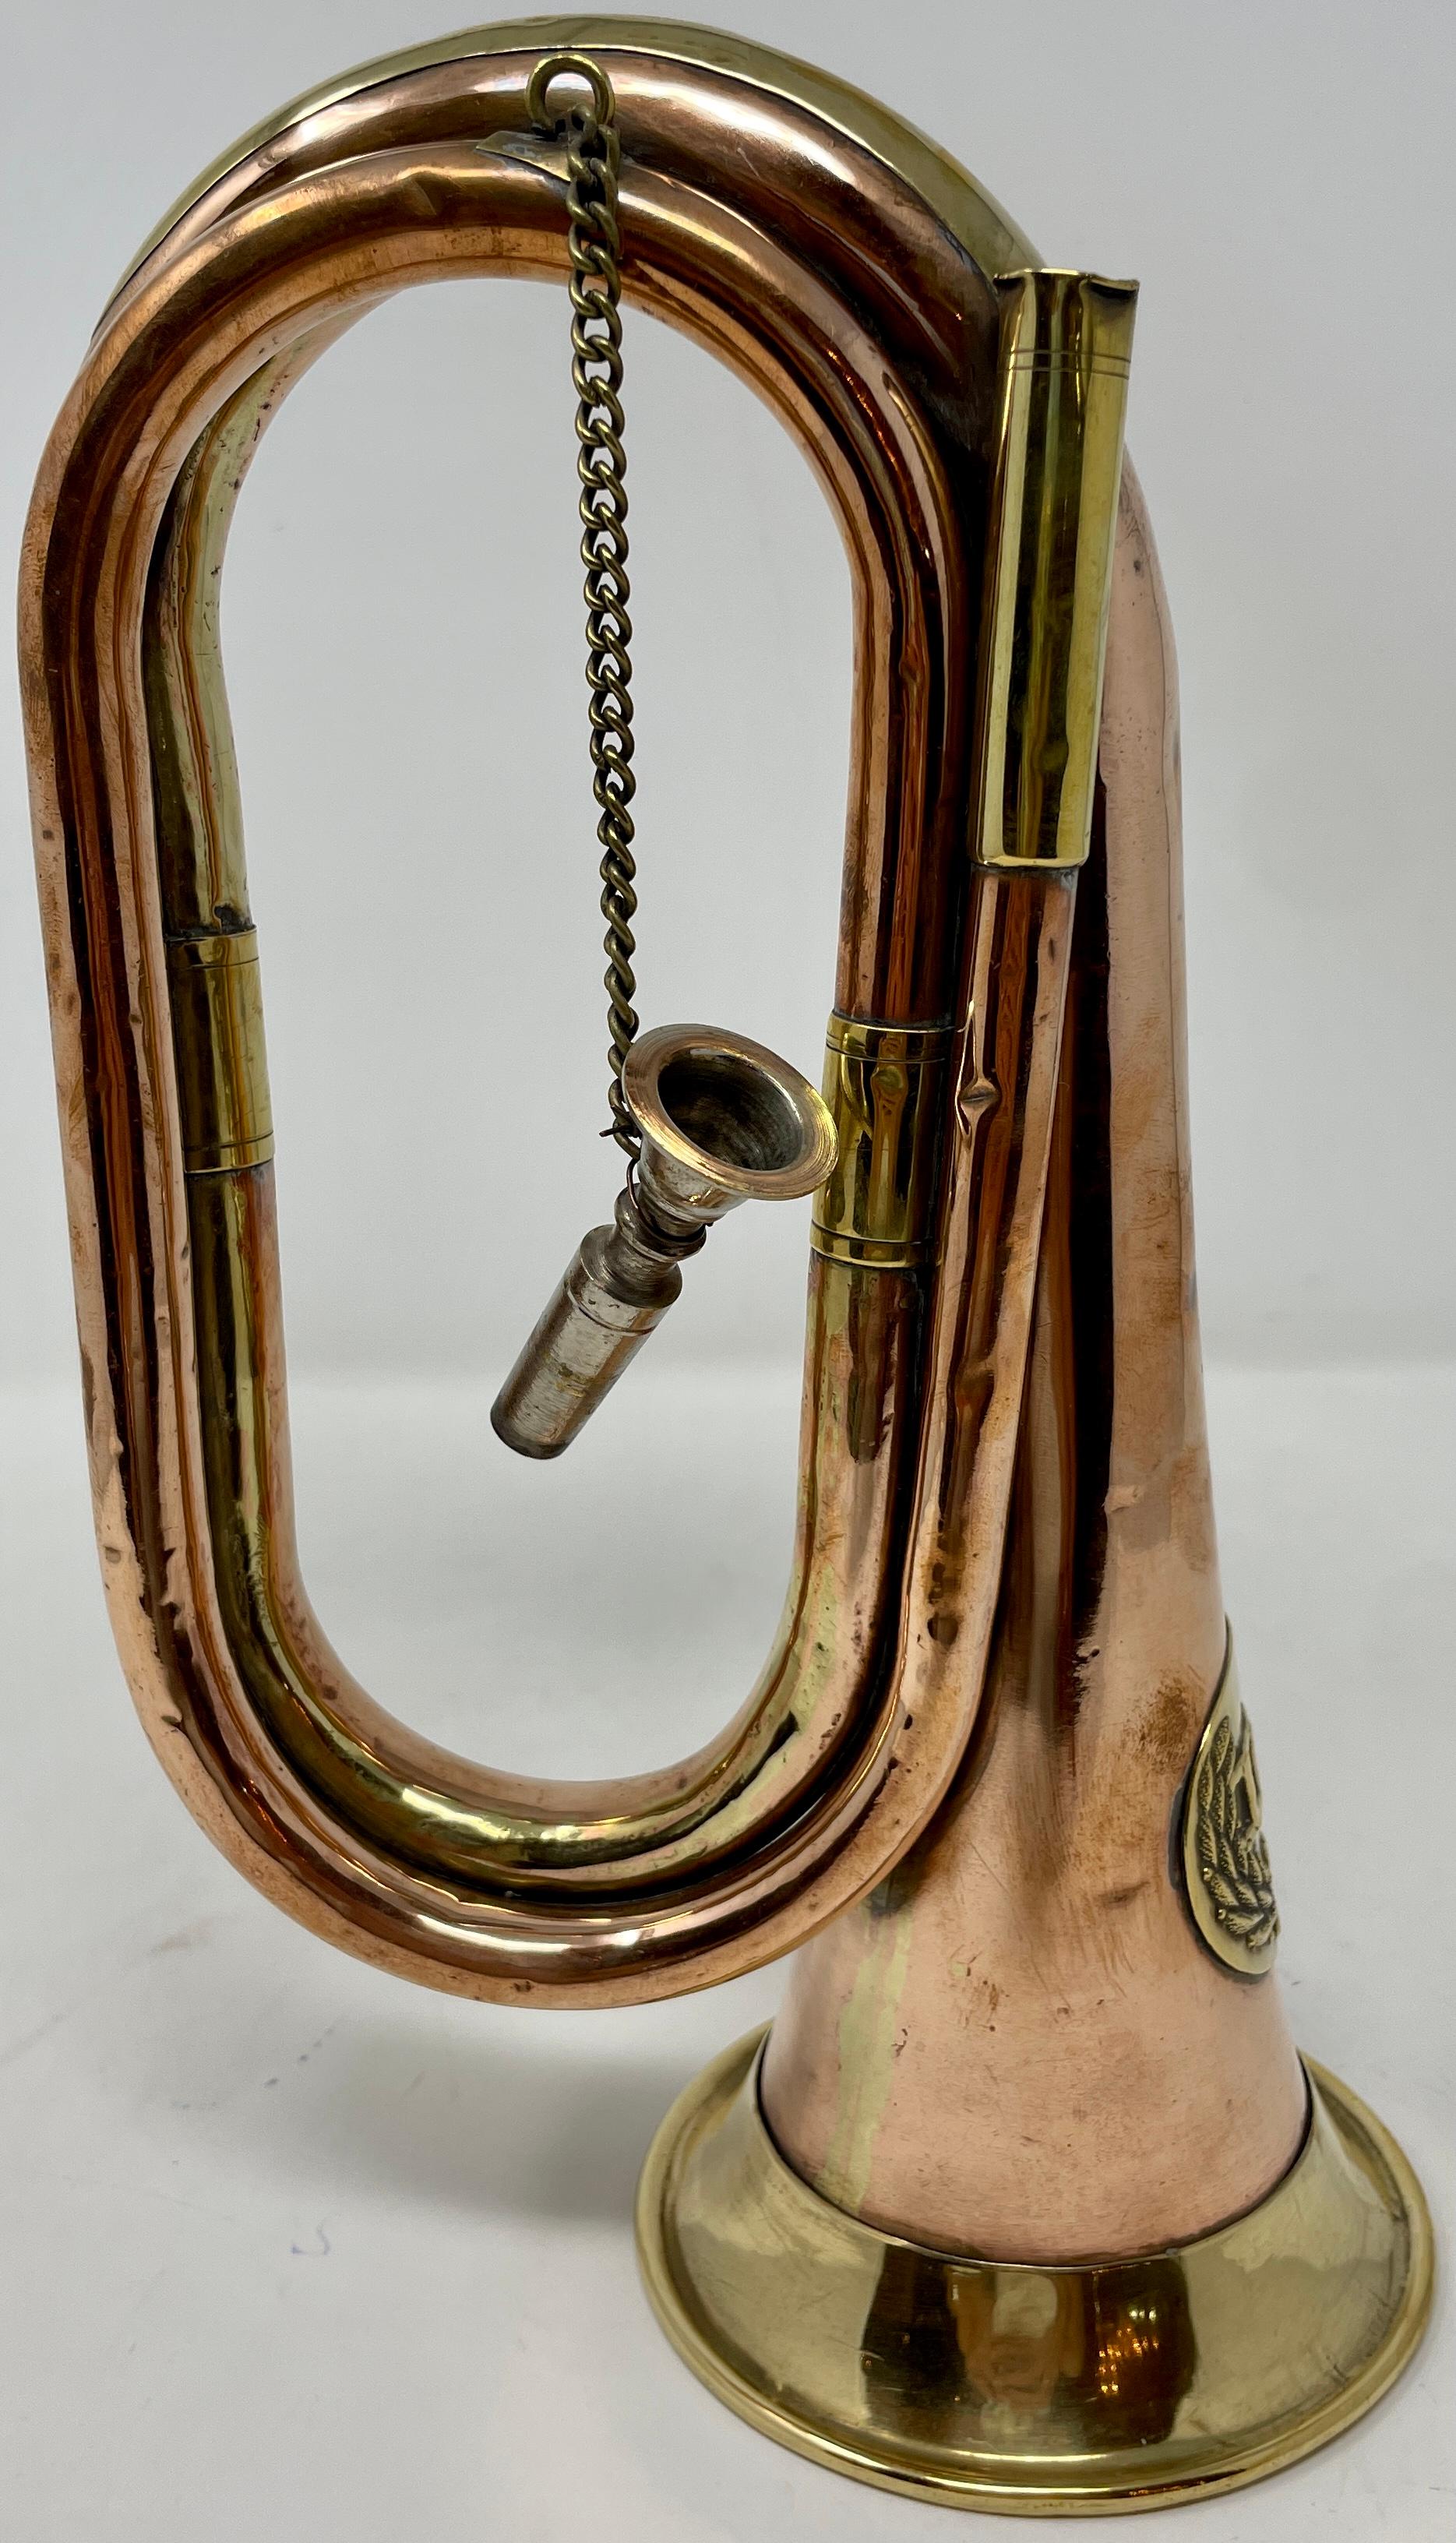 Antique copper and brass military bugle, Circa 1890-1910.